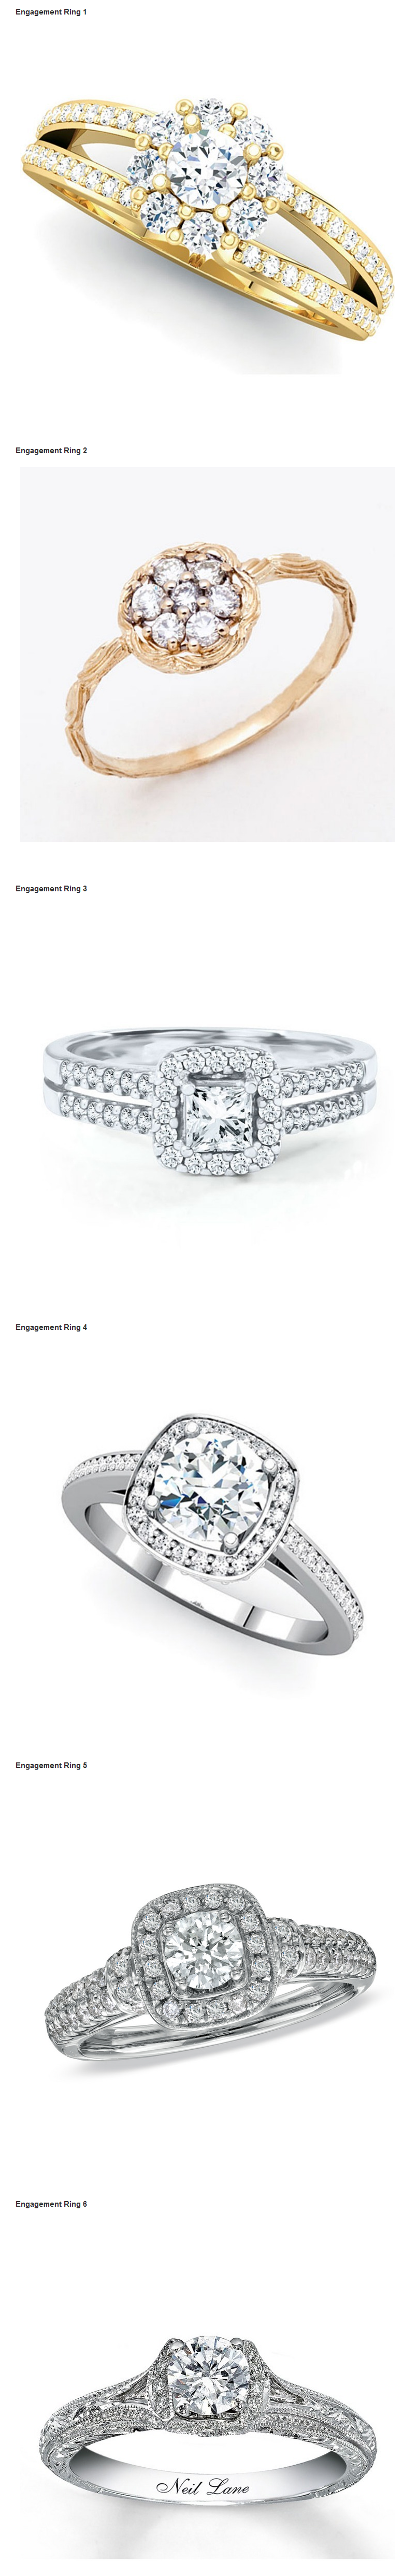 Diamond engagement rings wedding rings solitaire stud earrings stone antique designer vintage pave